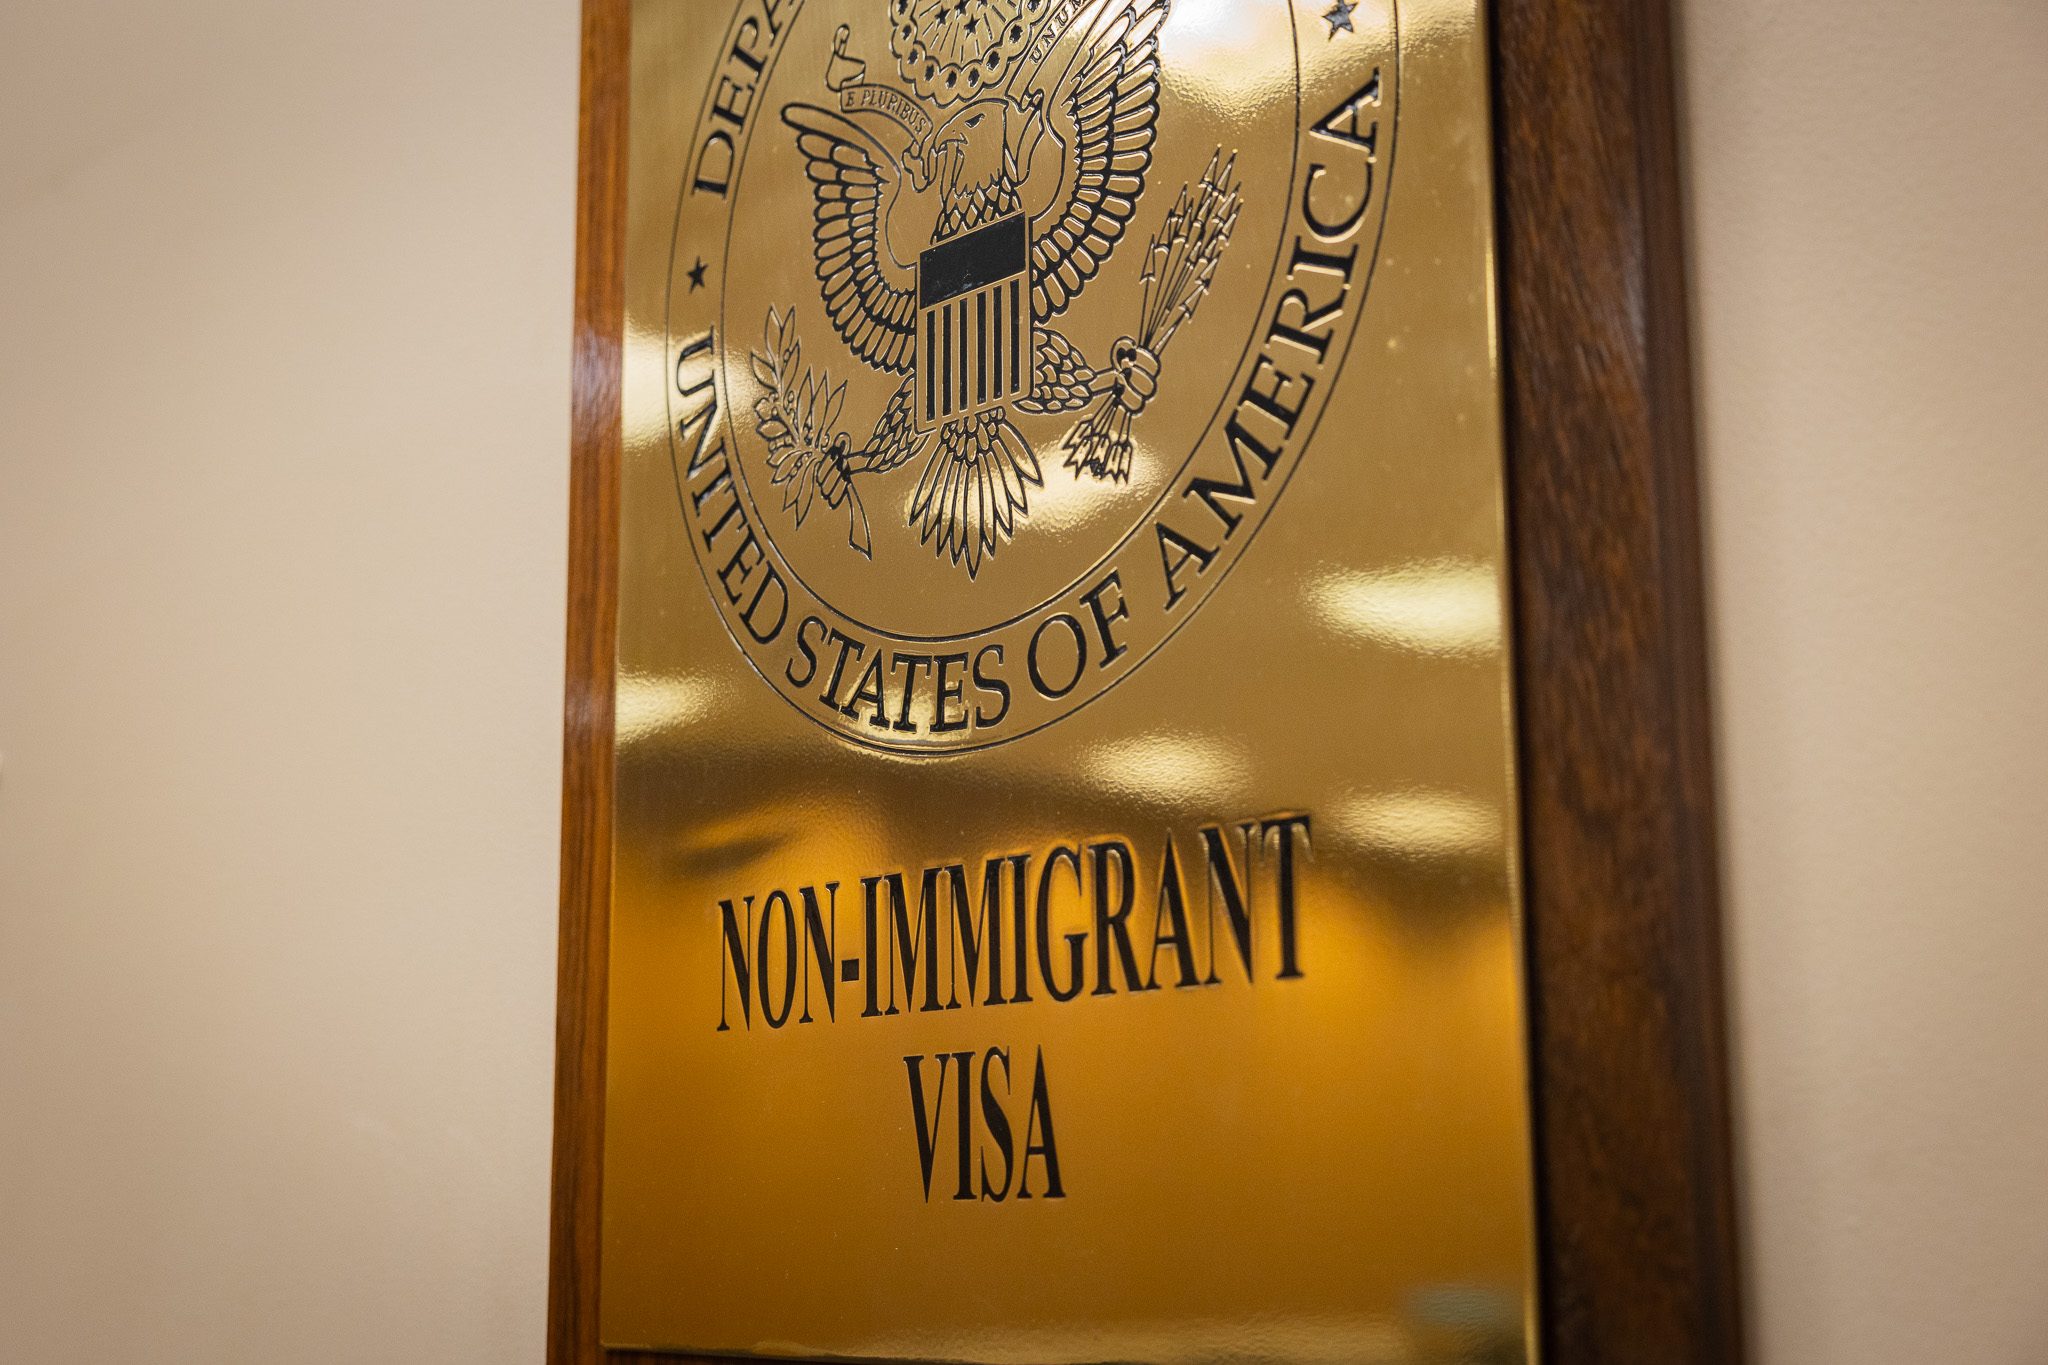 US embassy in Manila debunks myths on visa application